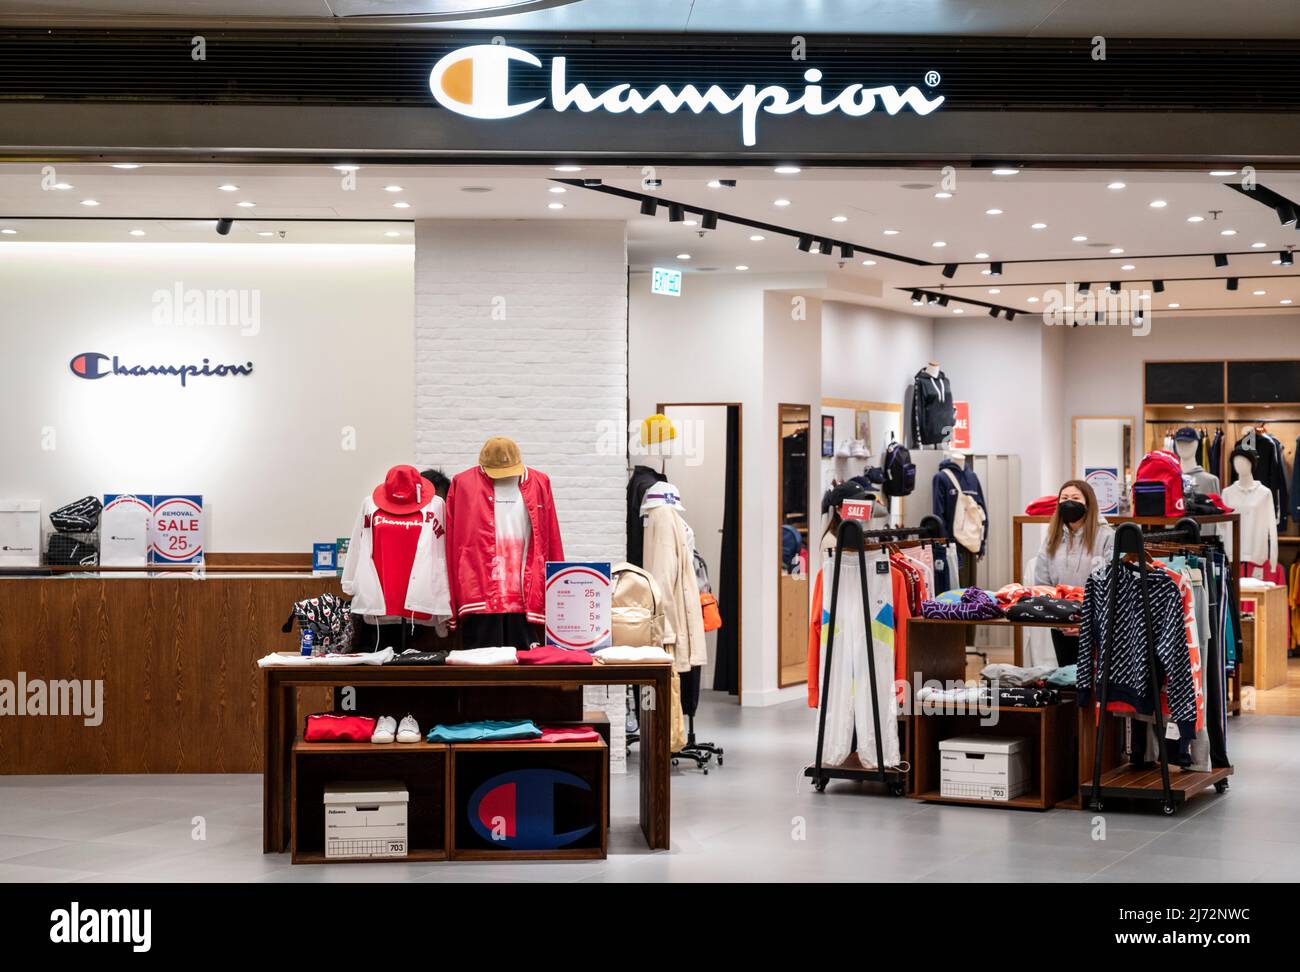 Champion brand hi-res images - Alamy